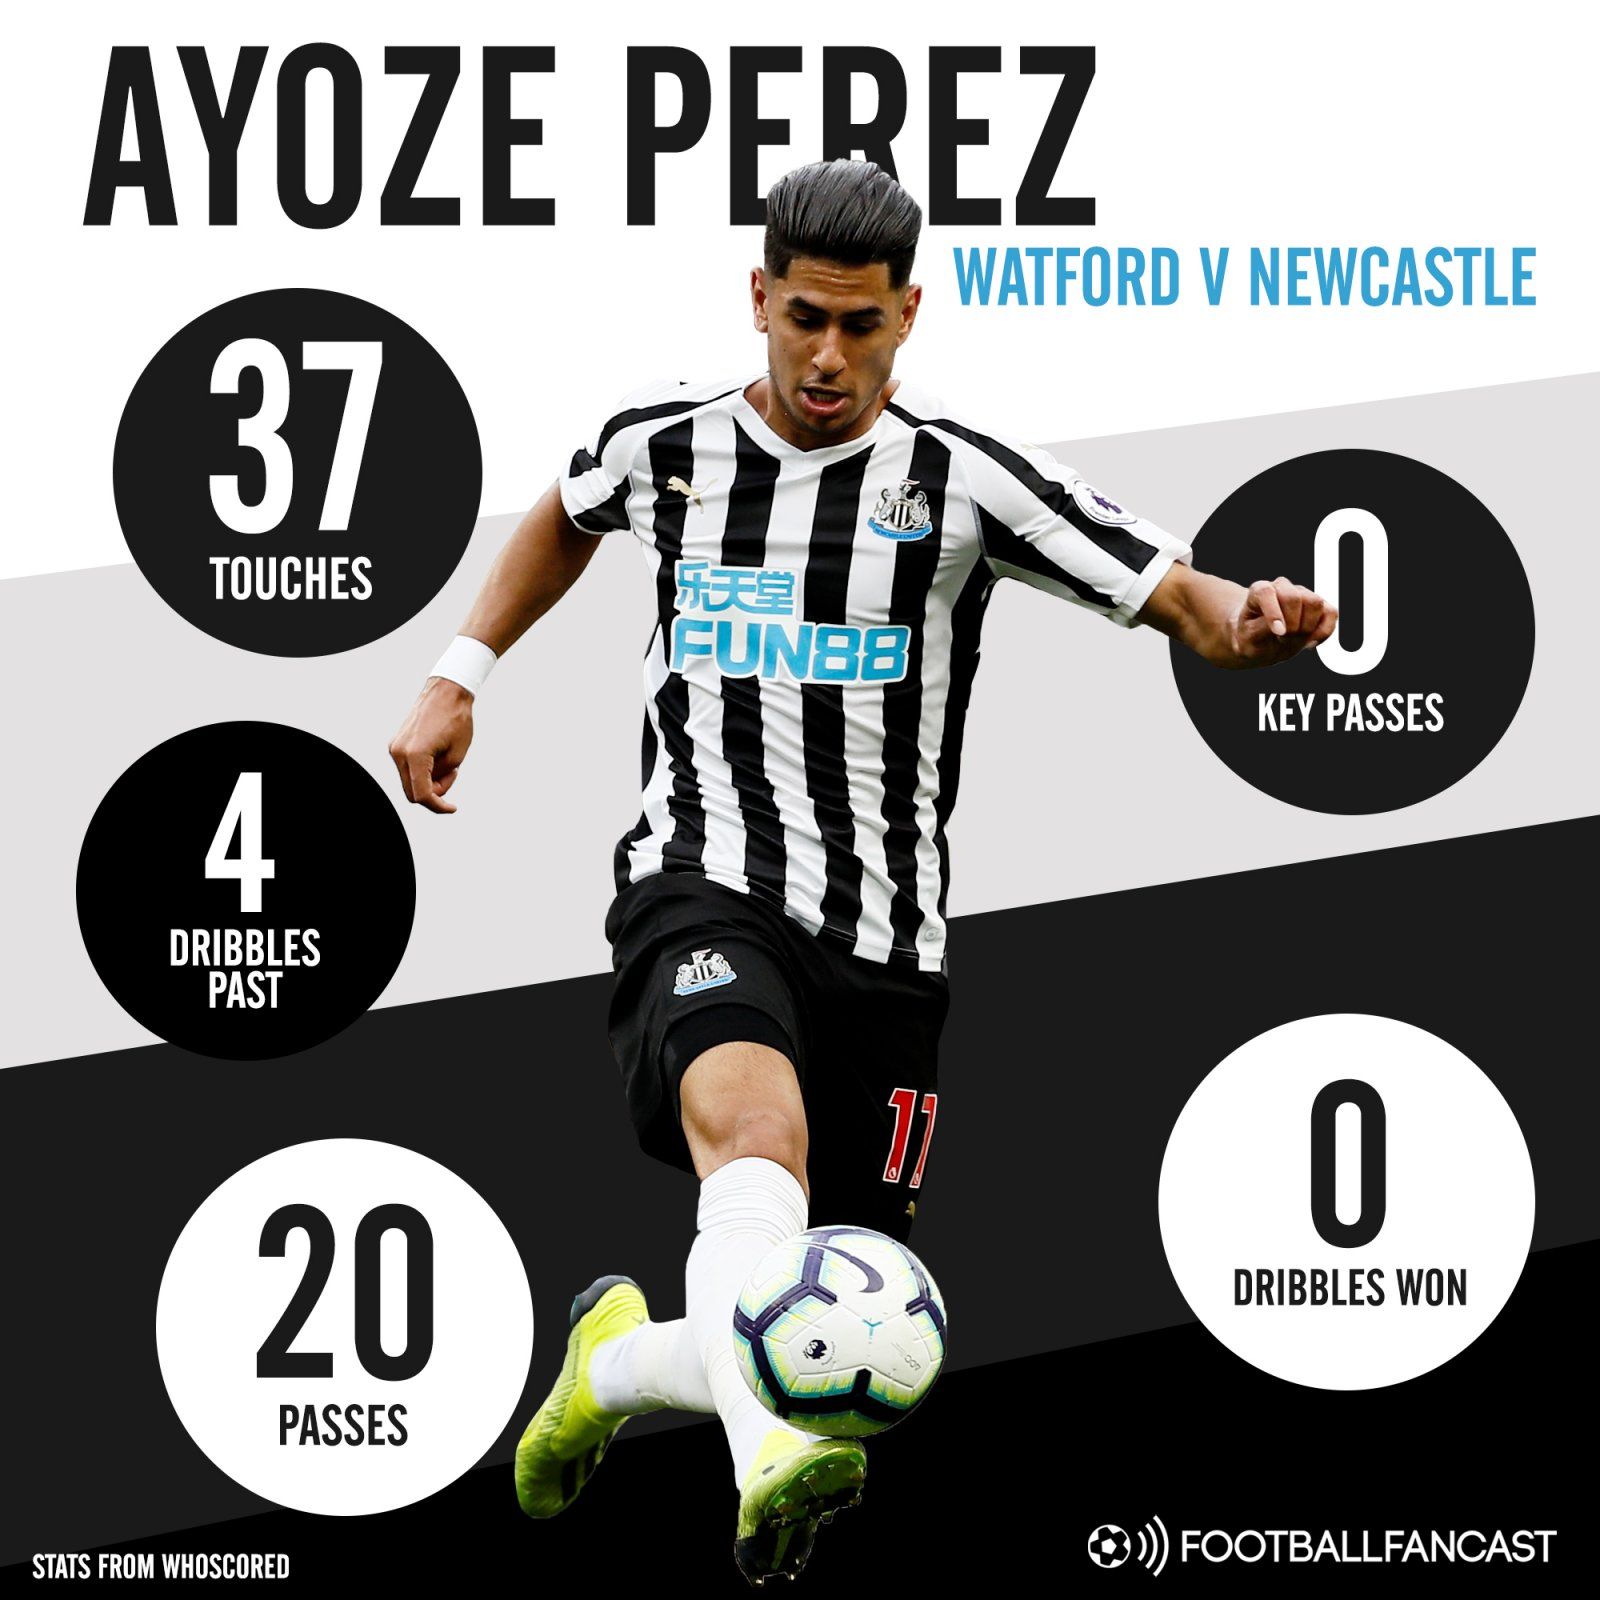 Performance in numbers - Newcastle Ayoze Perez